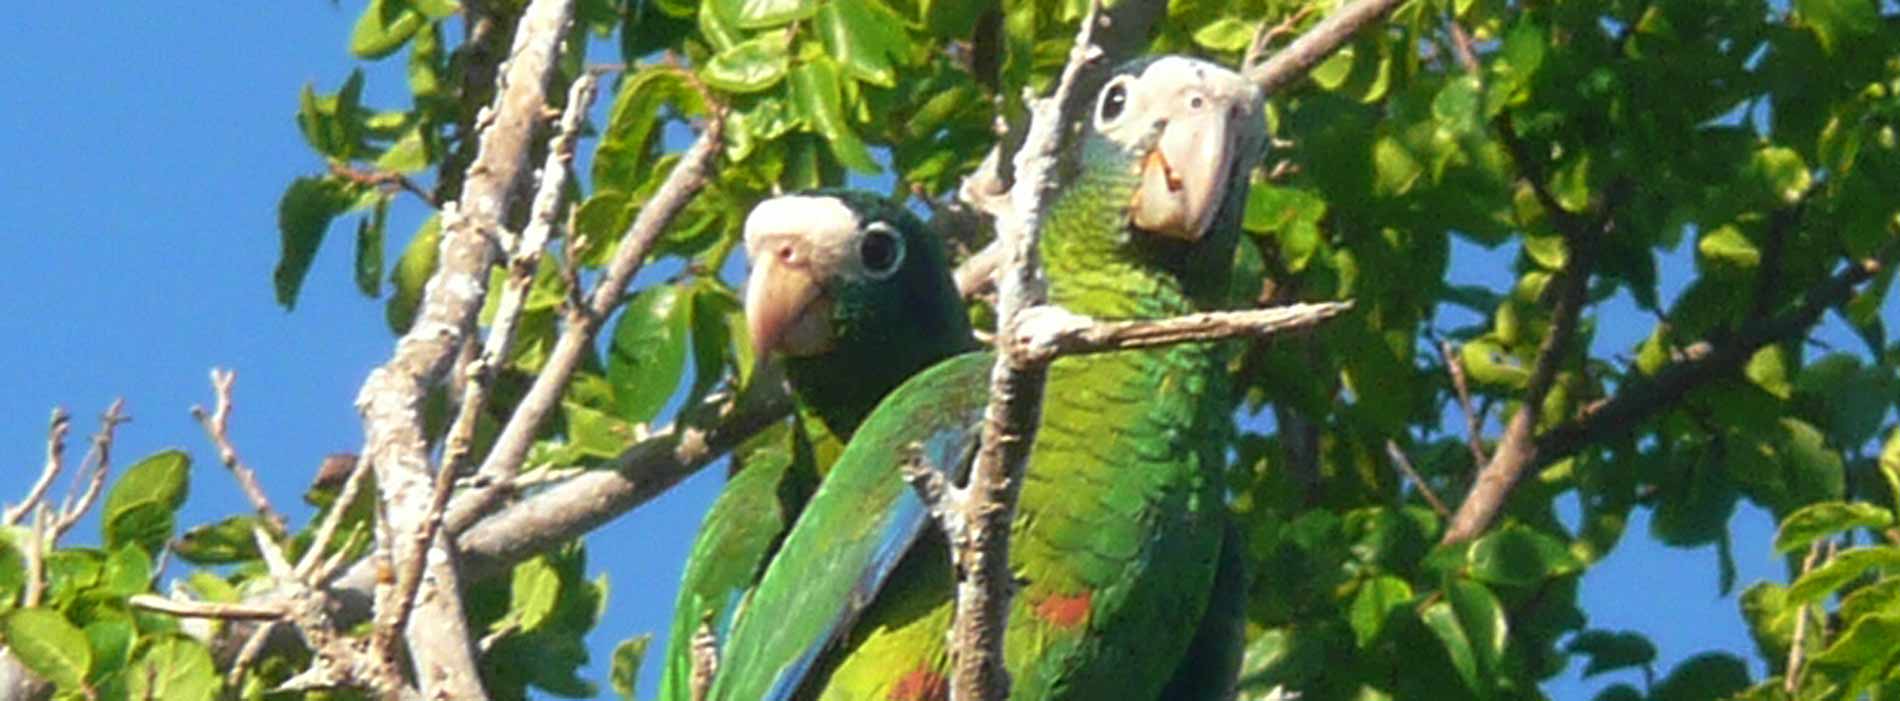 Hispaniolian Amazon parrot